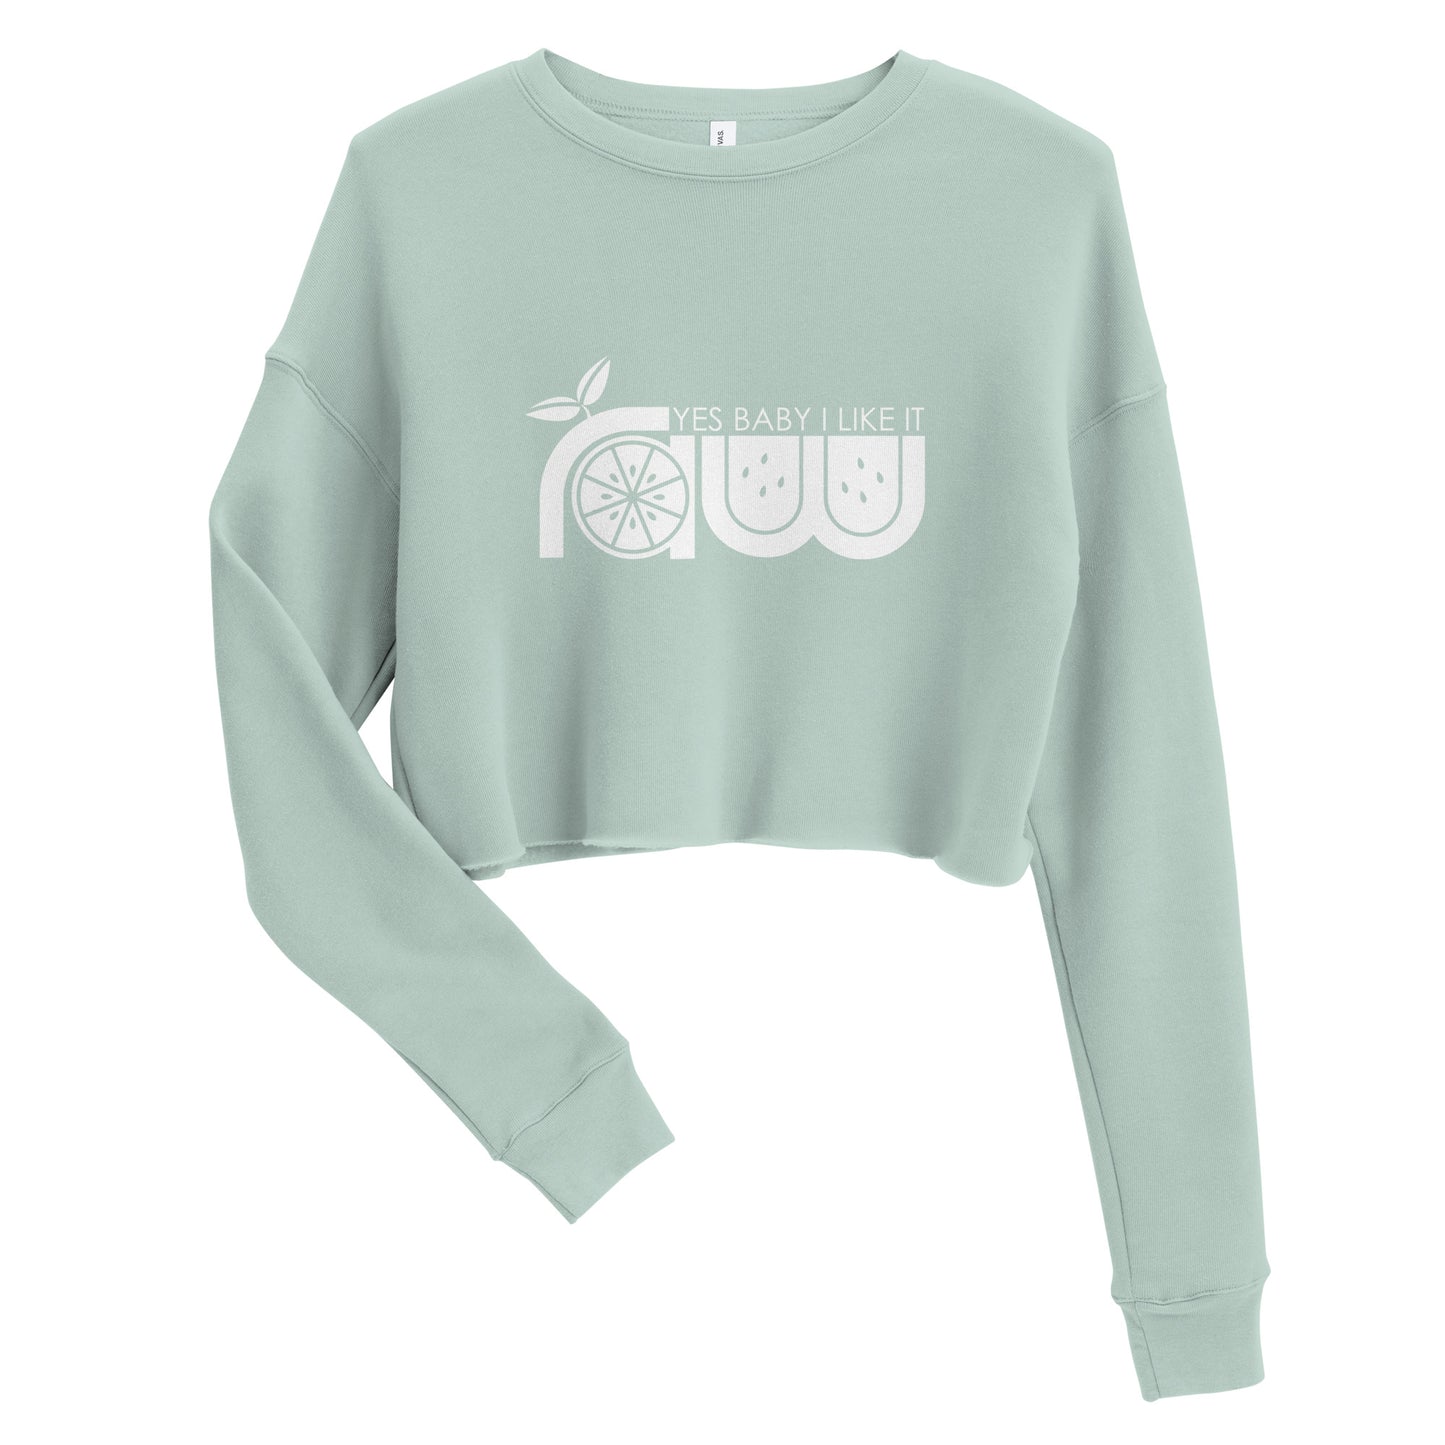 Yes Baby I Like It Raw Crop Sweatshirt